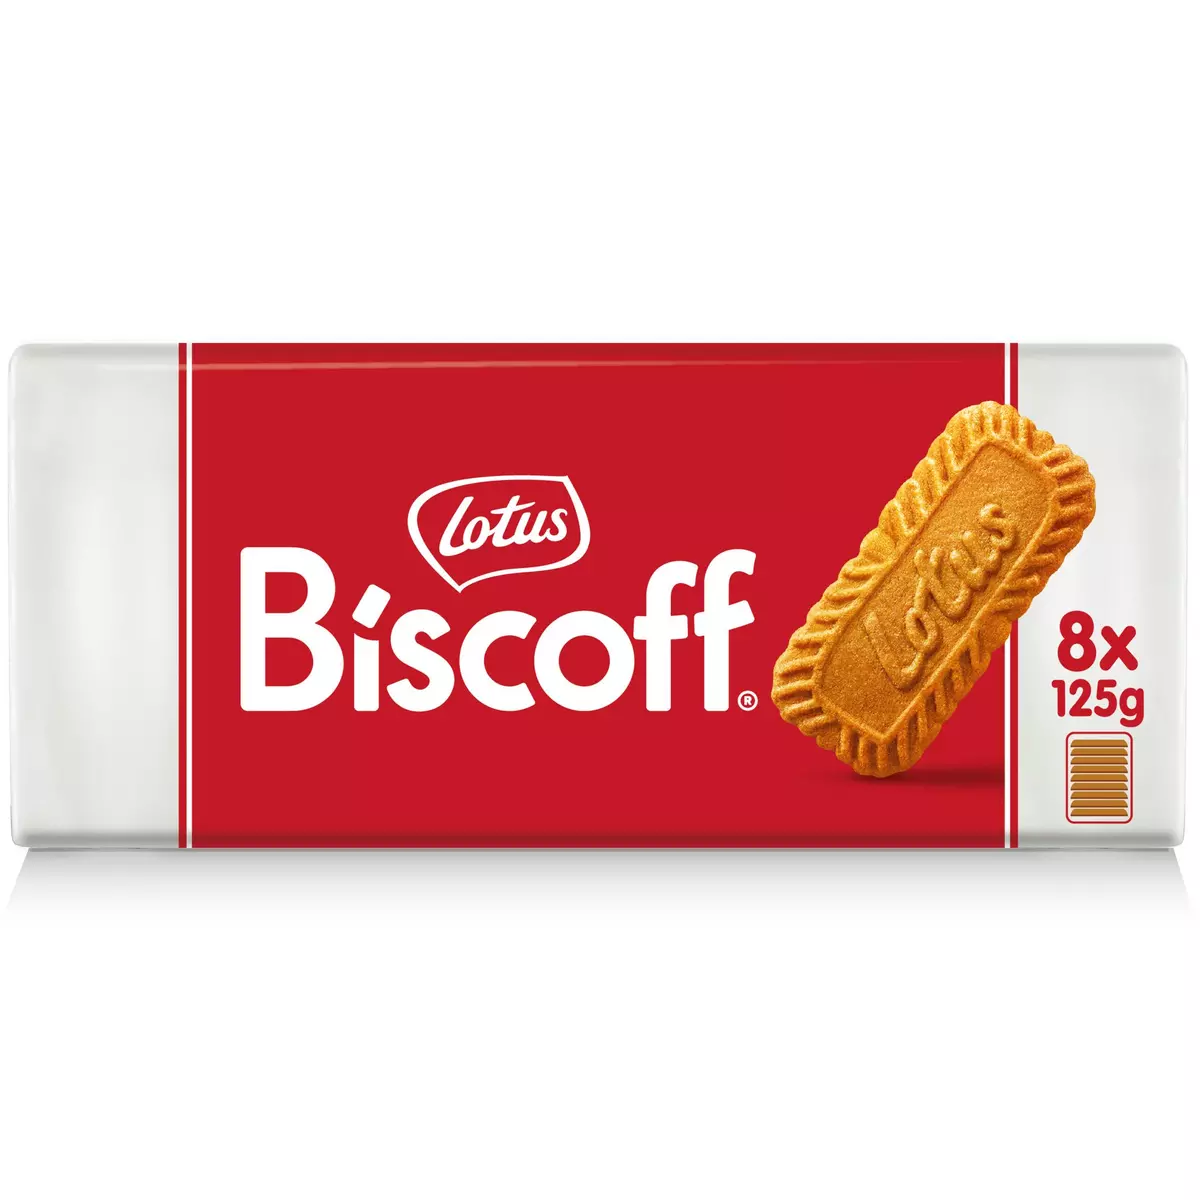 LOTUS Biscoff Biscuits Speculoos original maxi format 8 sachets 1kg (8x125g)